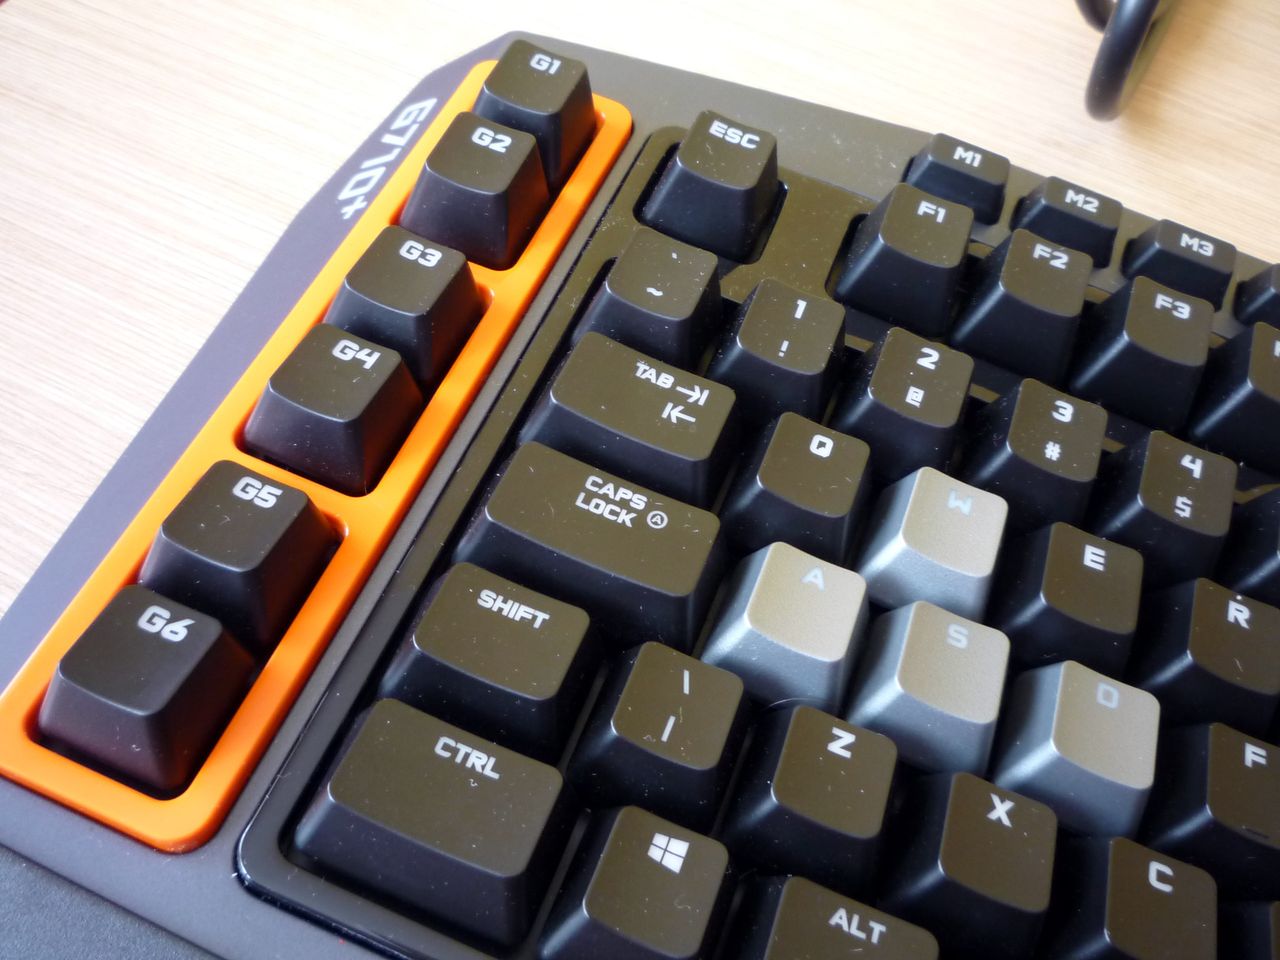 Logitech G710+ Mechanical Keyboard